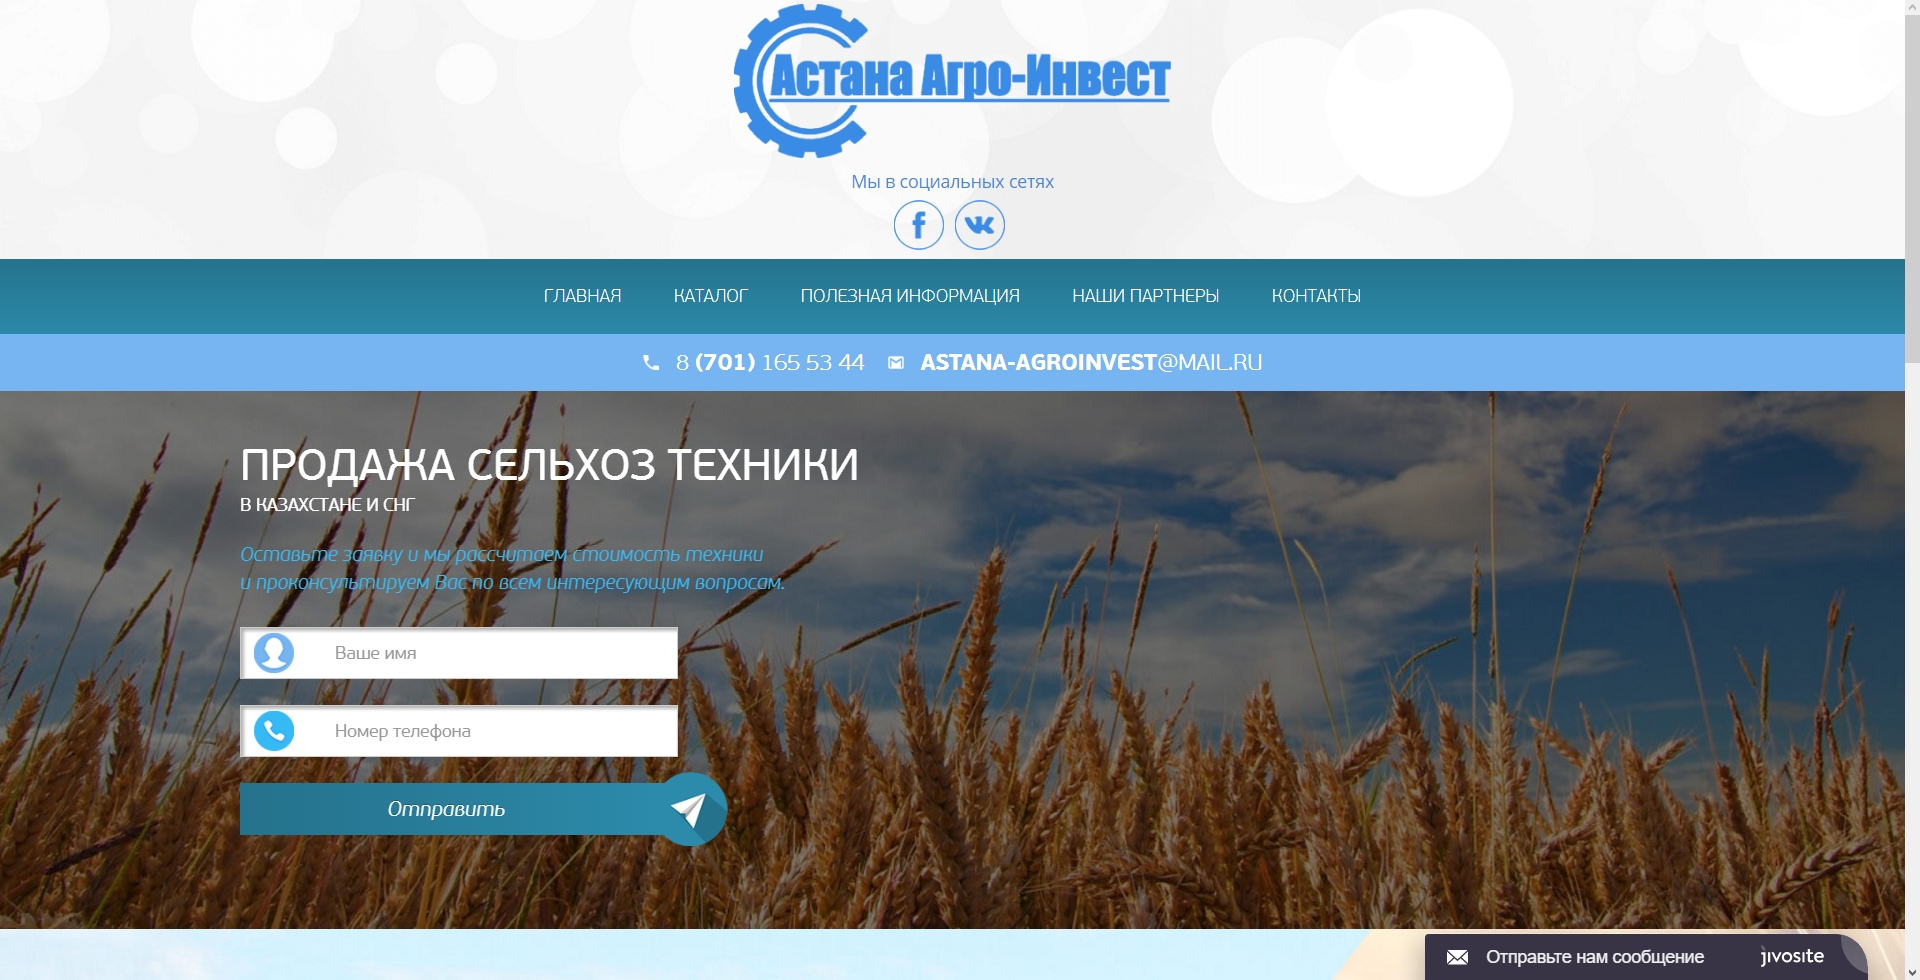 Редизайн сайта АстанаАгроИнвест, г. Астана - http://agro-invest.kz